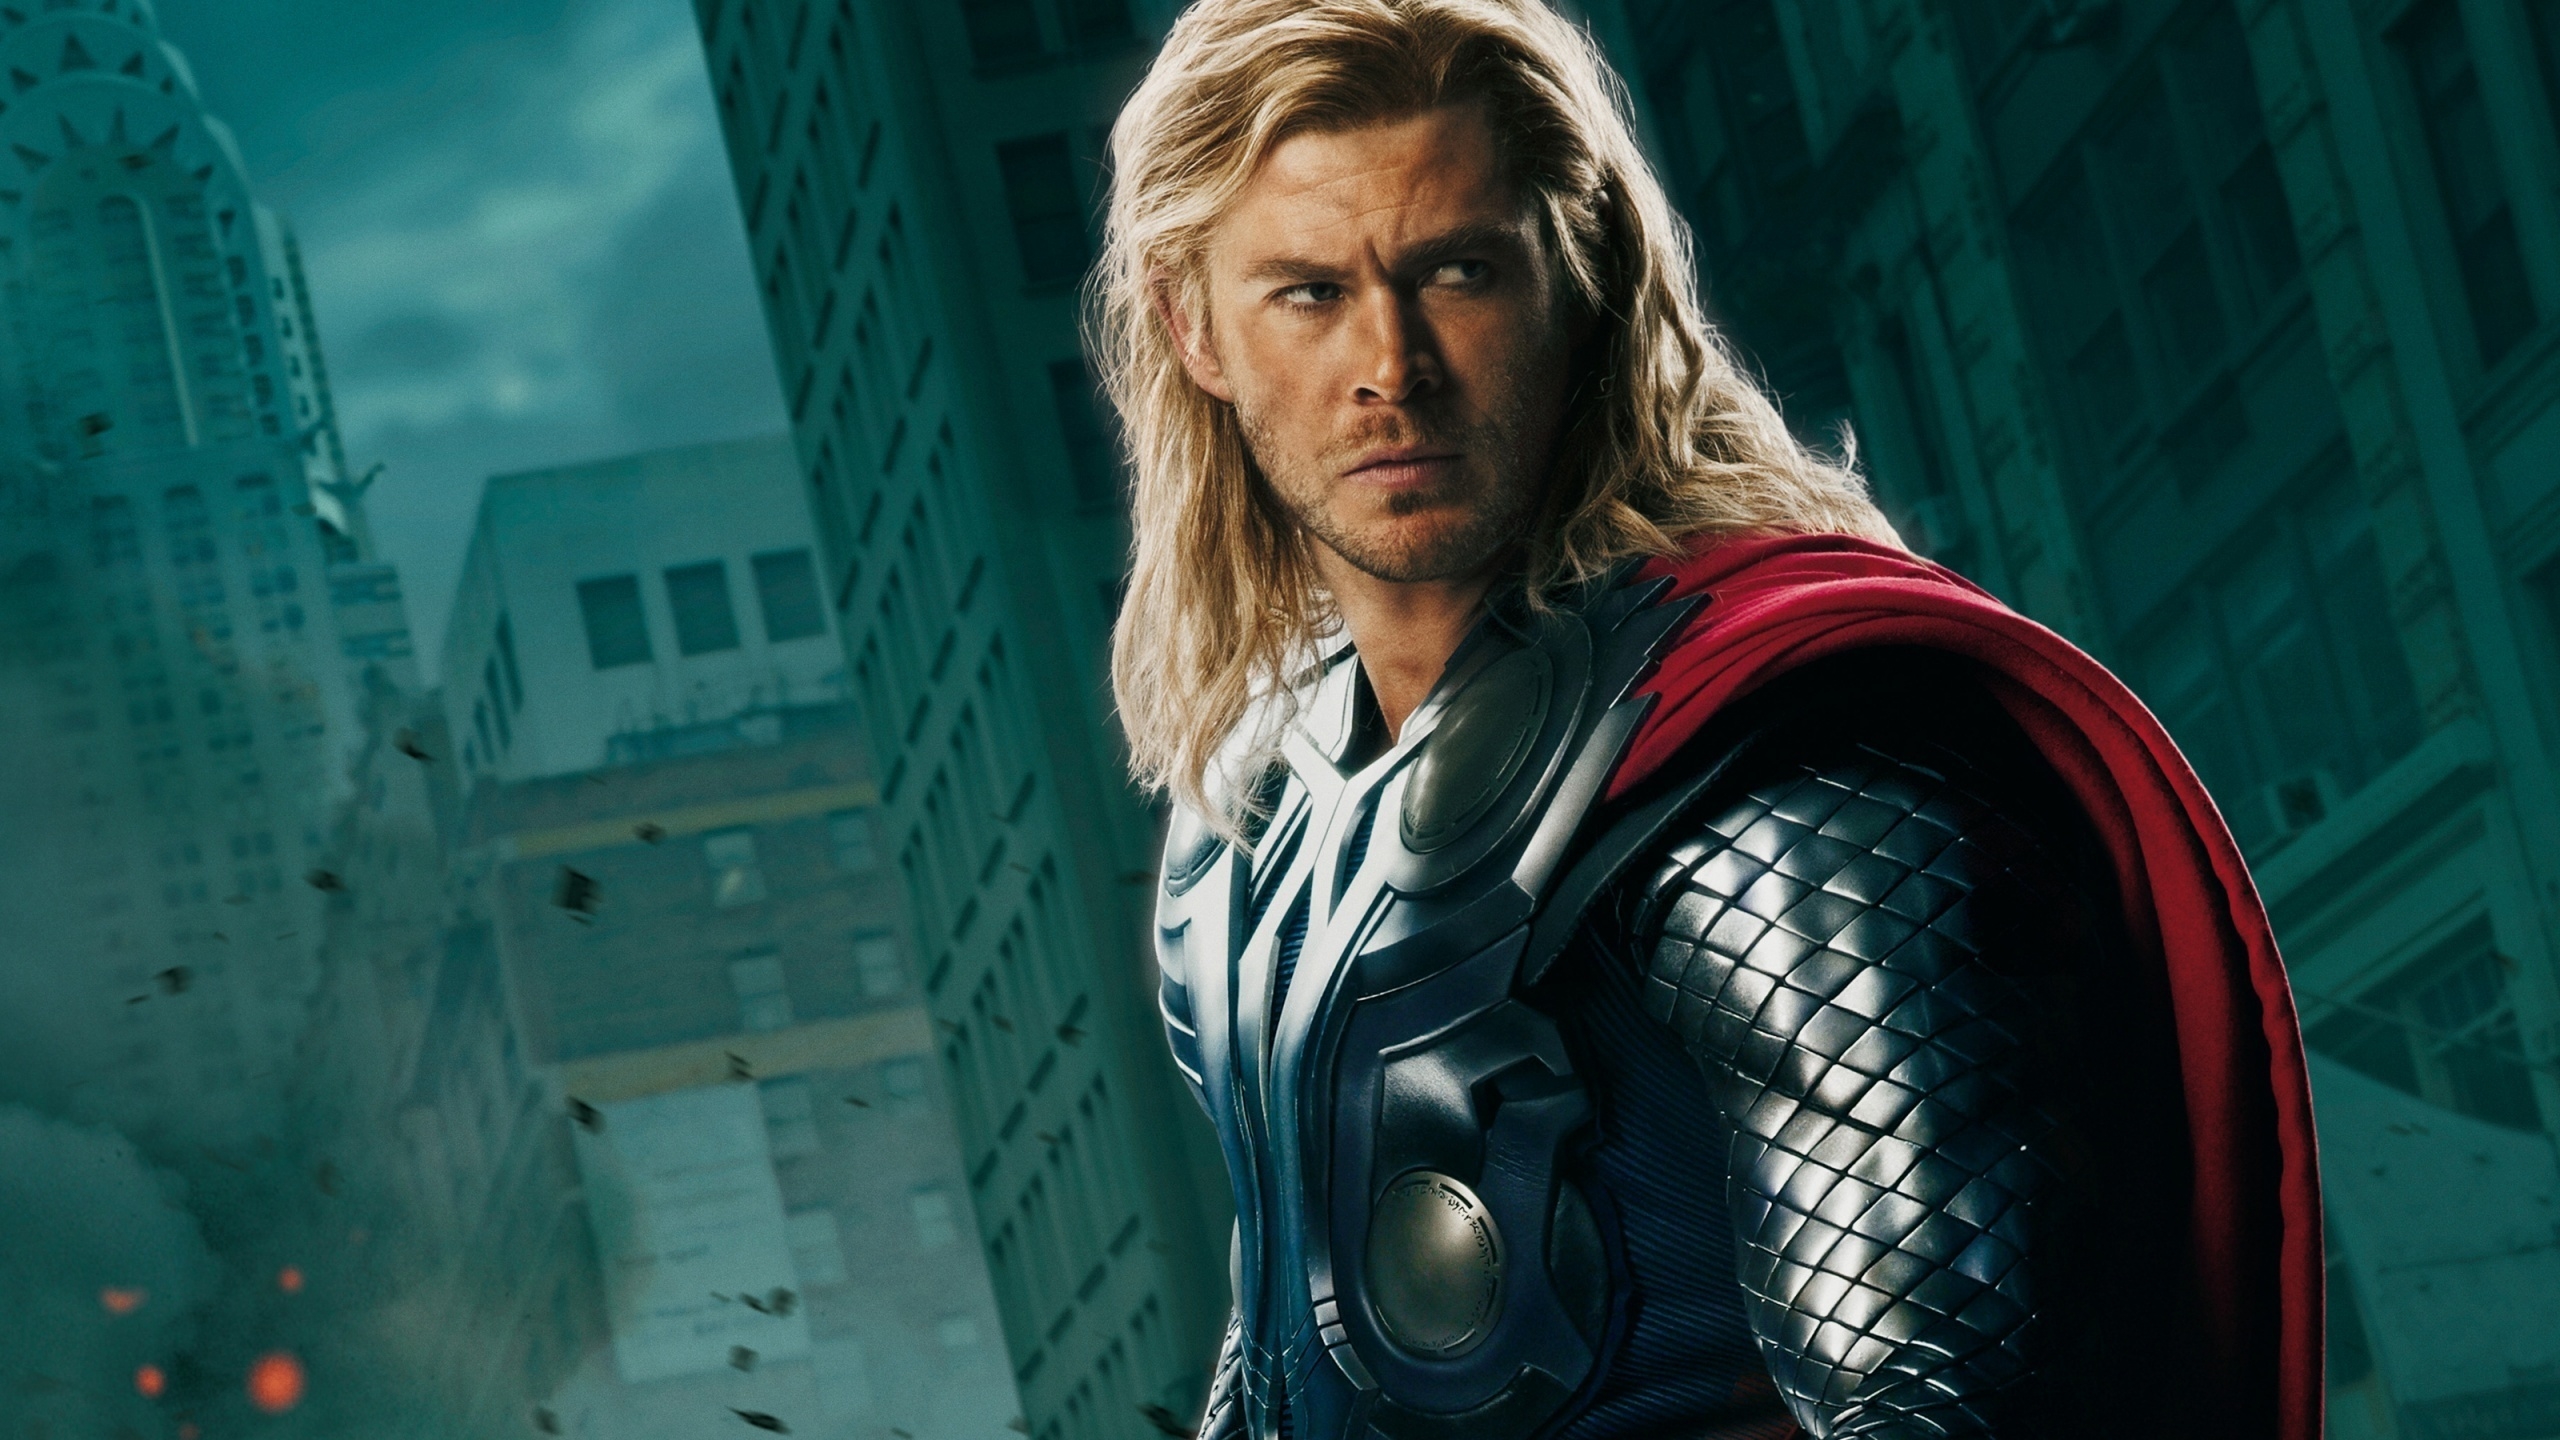 Thor The Avengers for 2560x1440 HDTV resolution